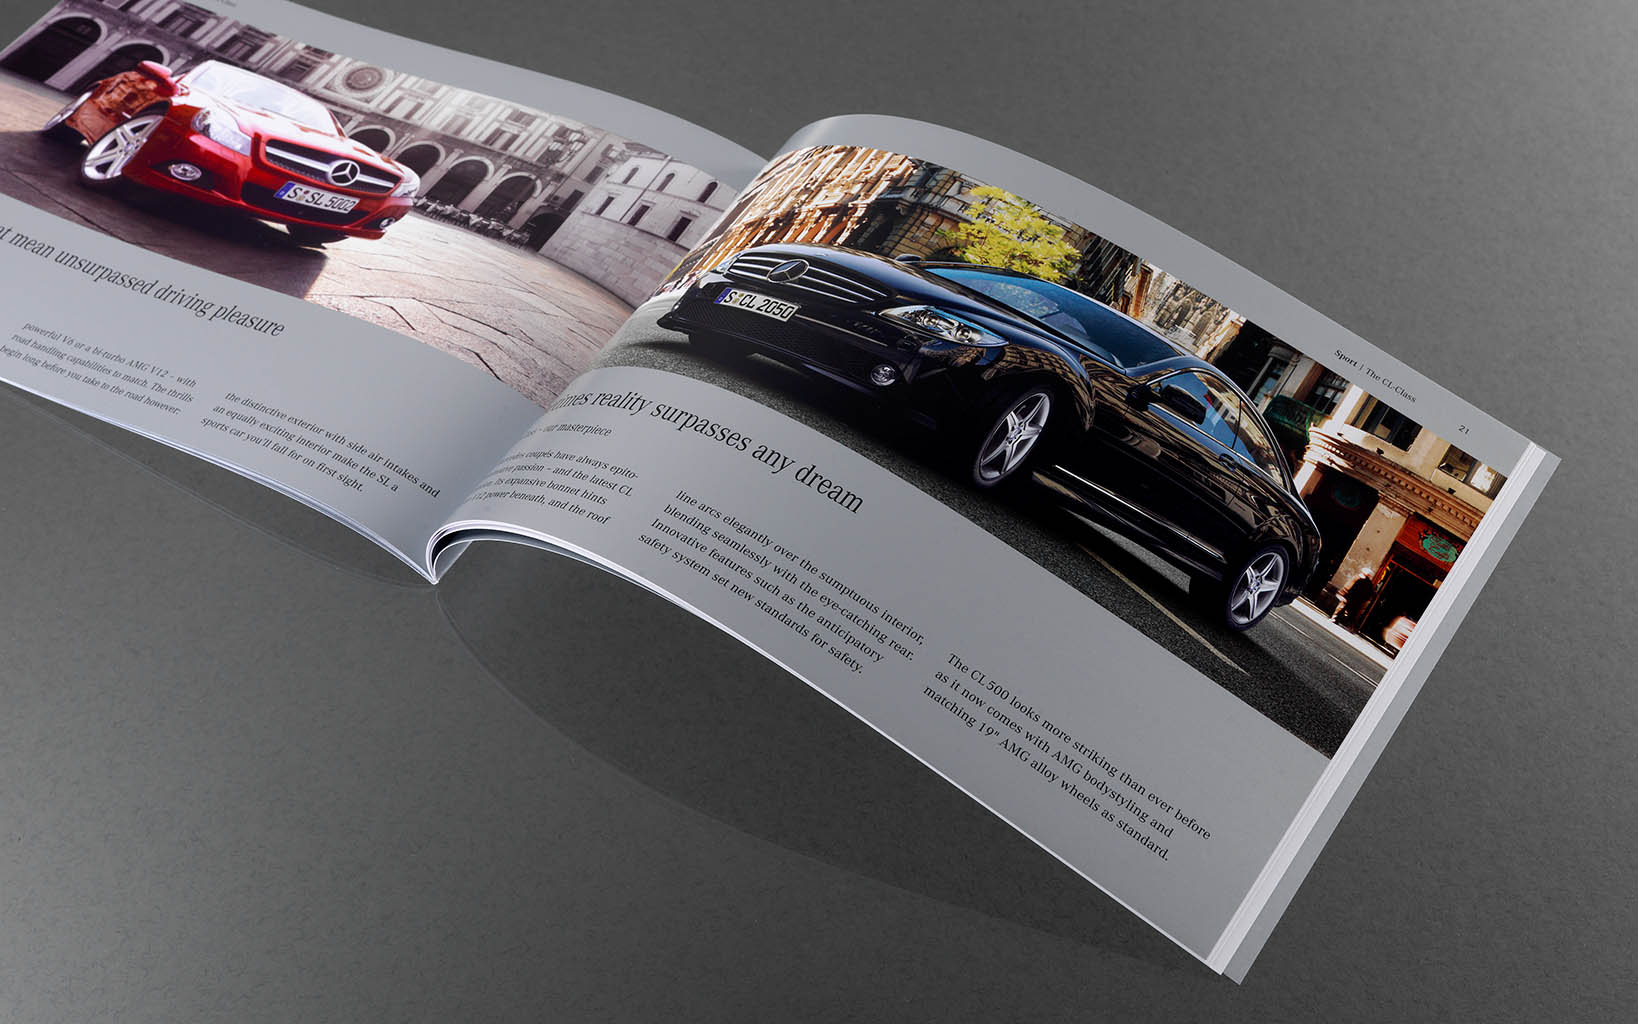 Artwork Photography of Mercedes-Benz brochure by Packshot Factory